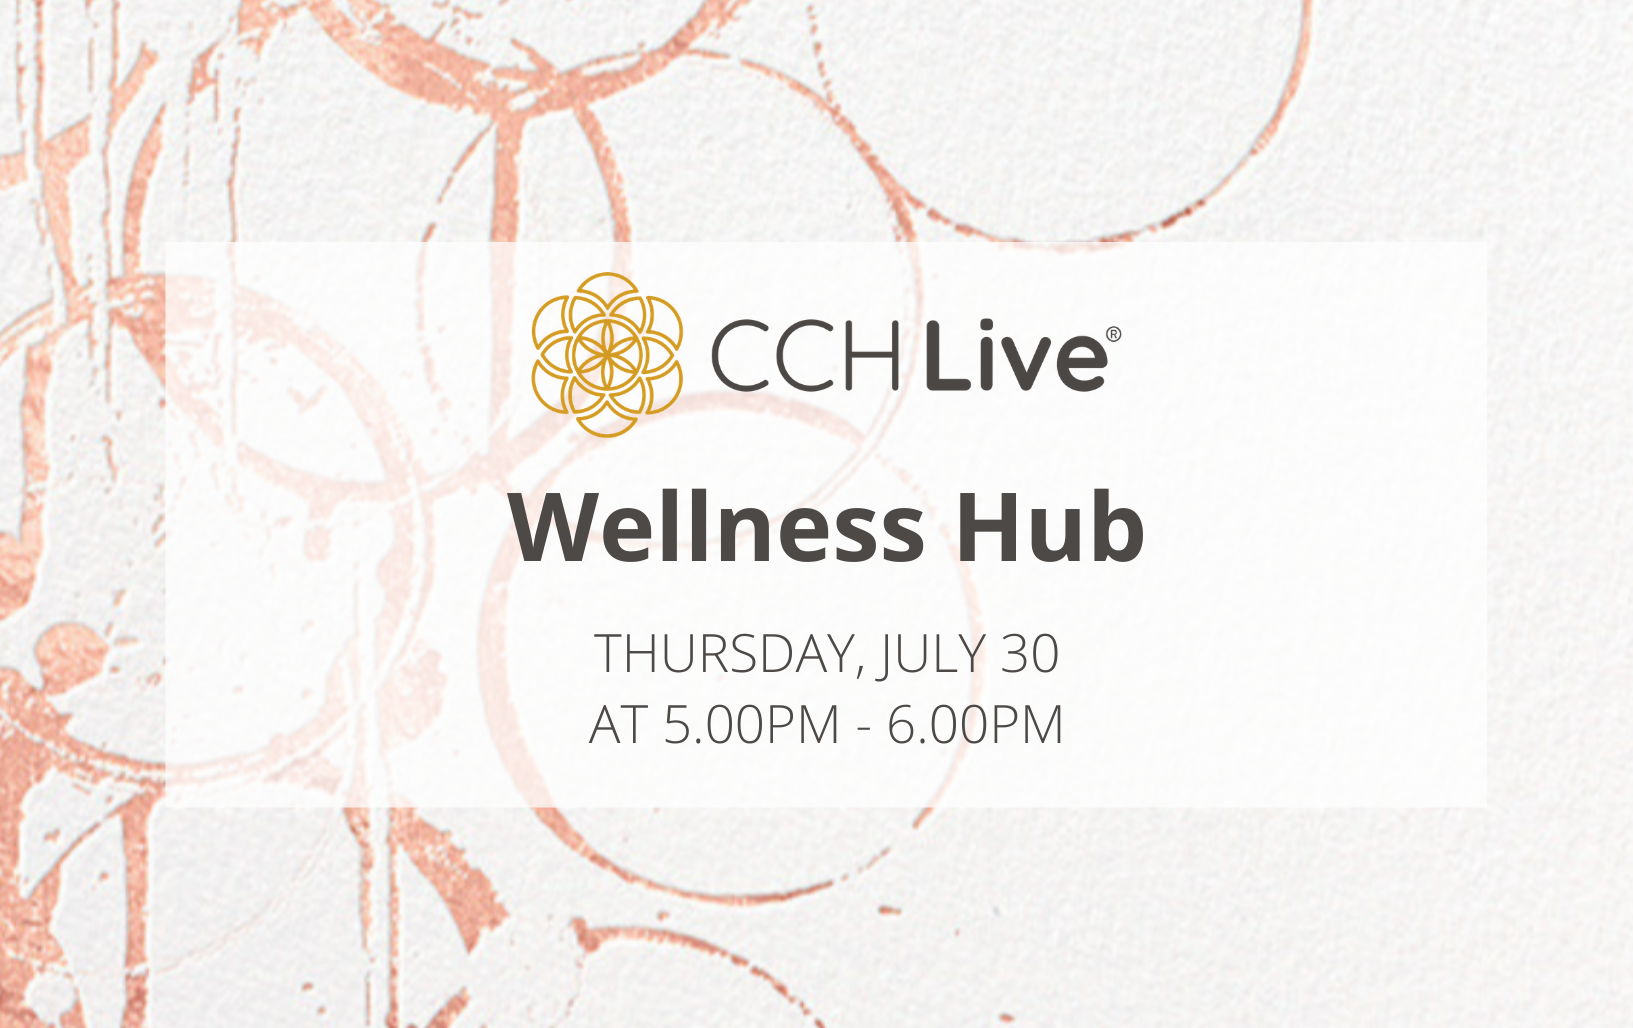 Wellness Hub Invite 30 July 20